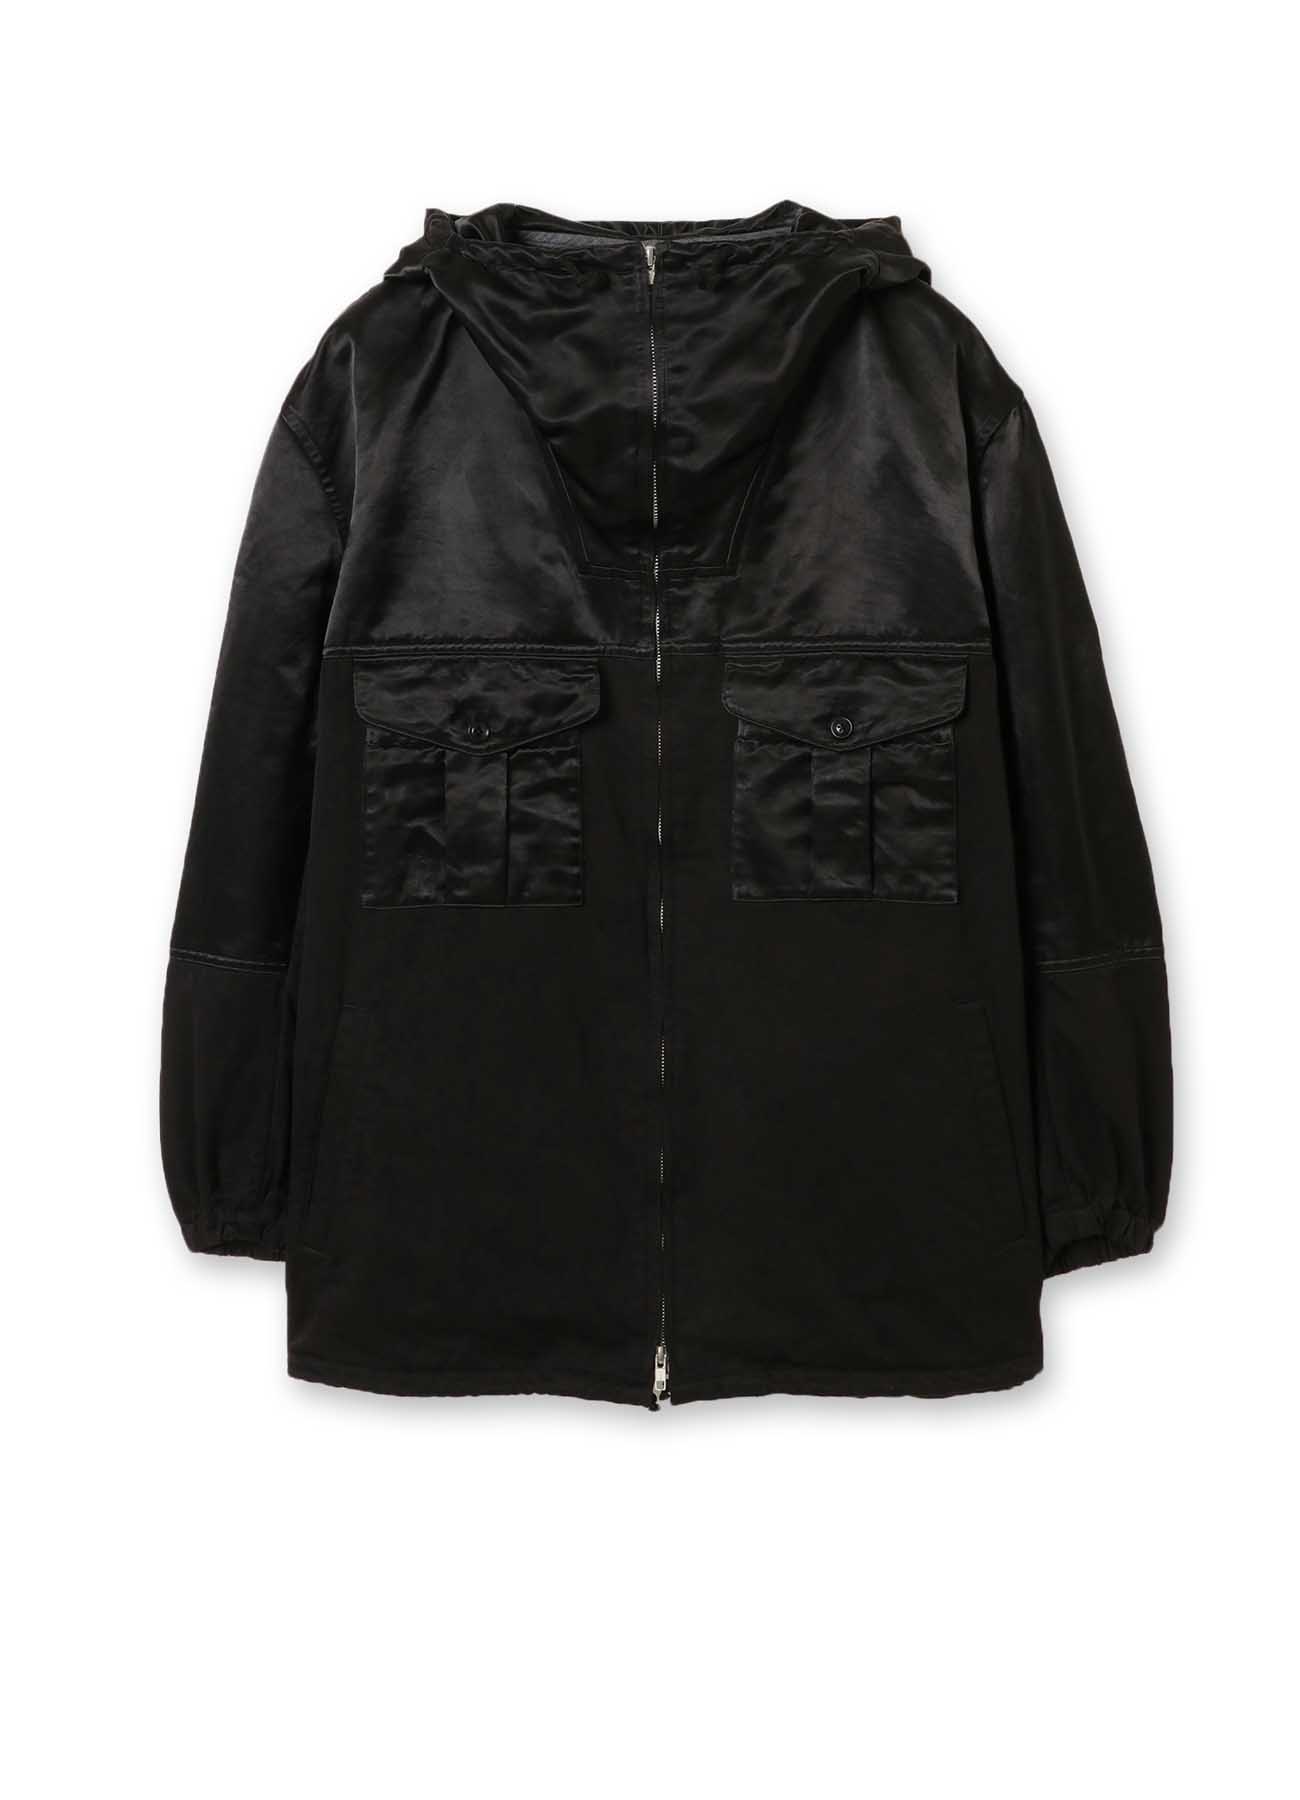 Cotton/Nylon twill combination Anorak jacket